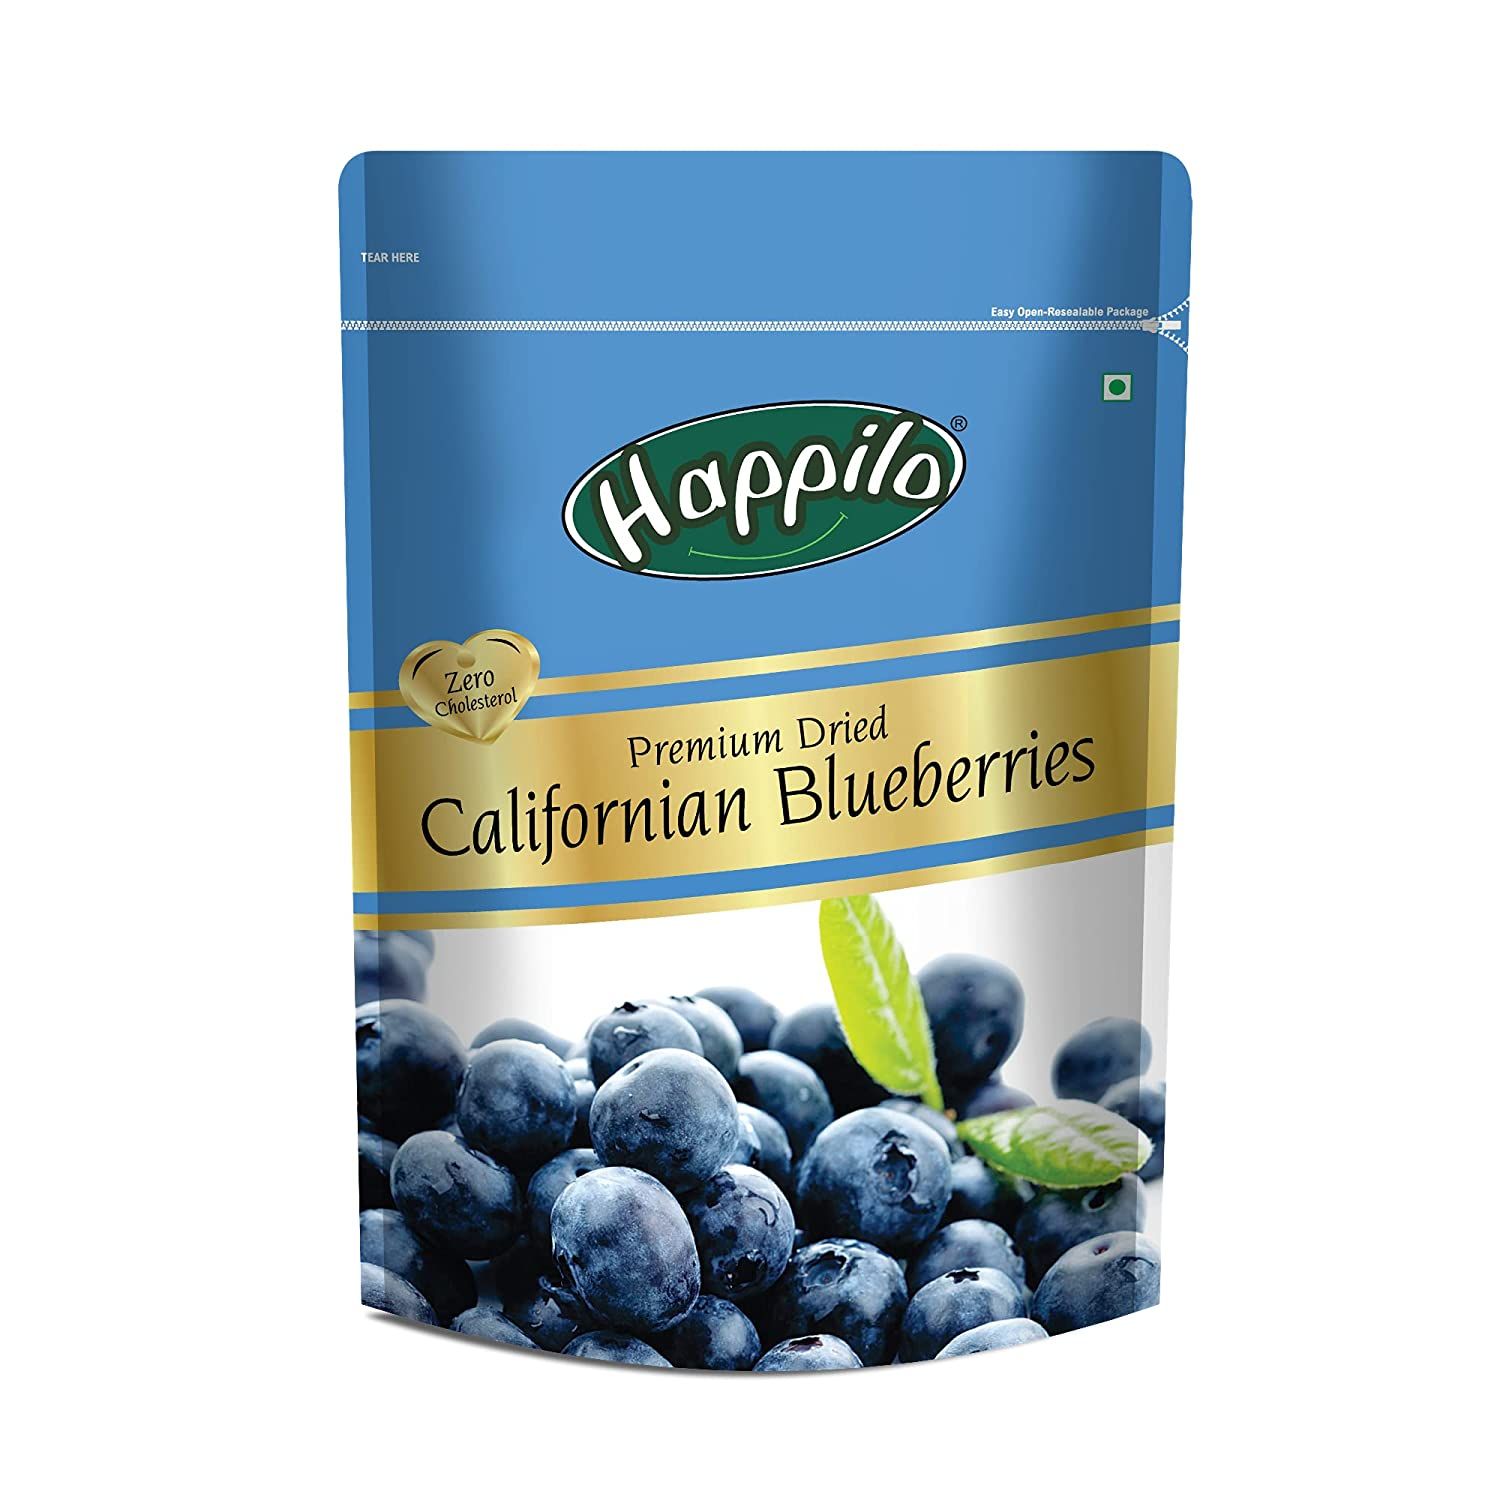 Happilo Premium Dried Californian Blueberries Image